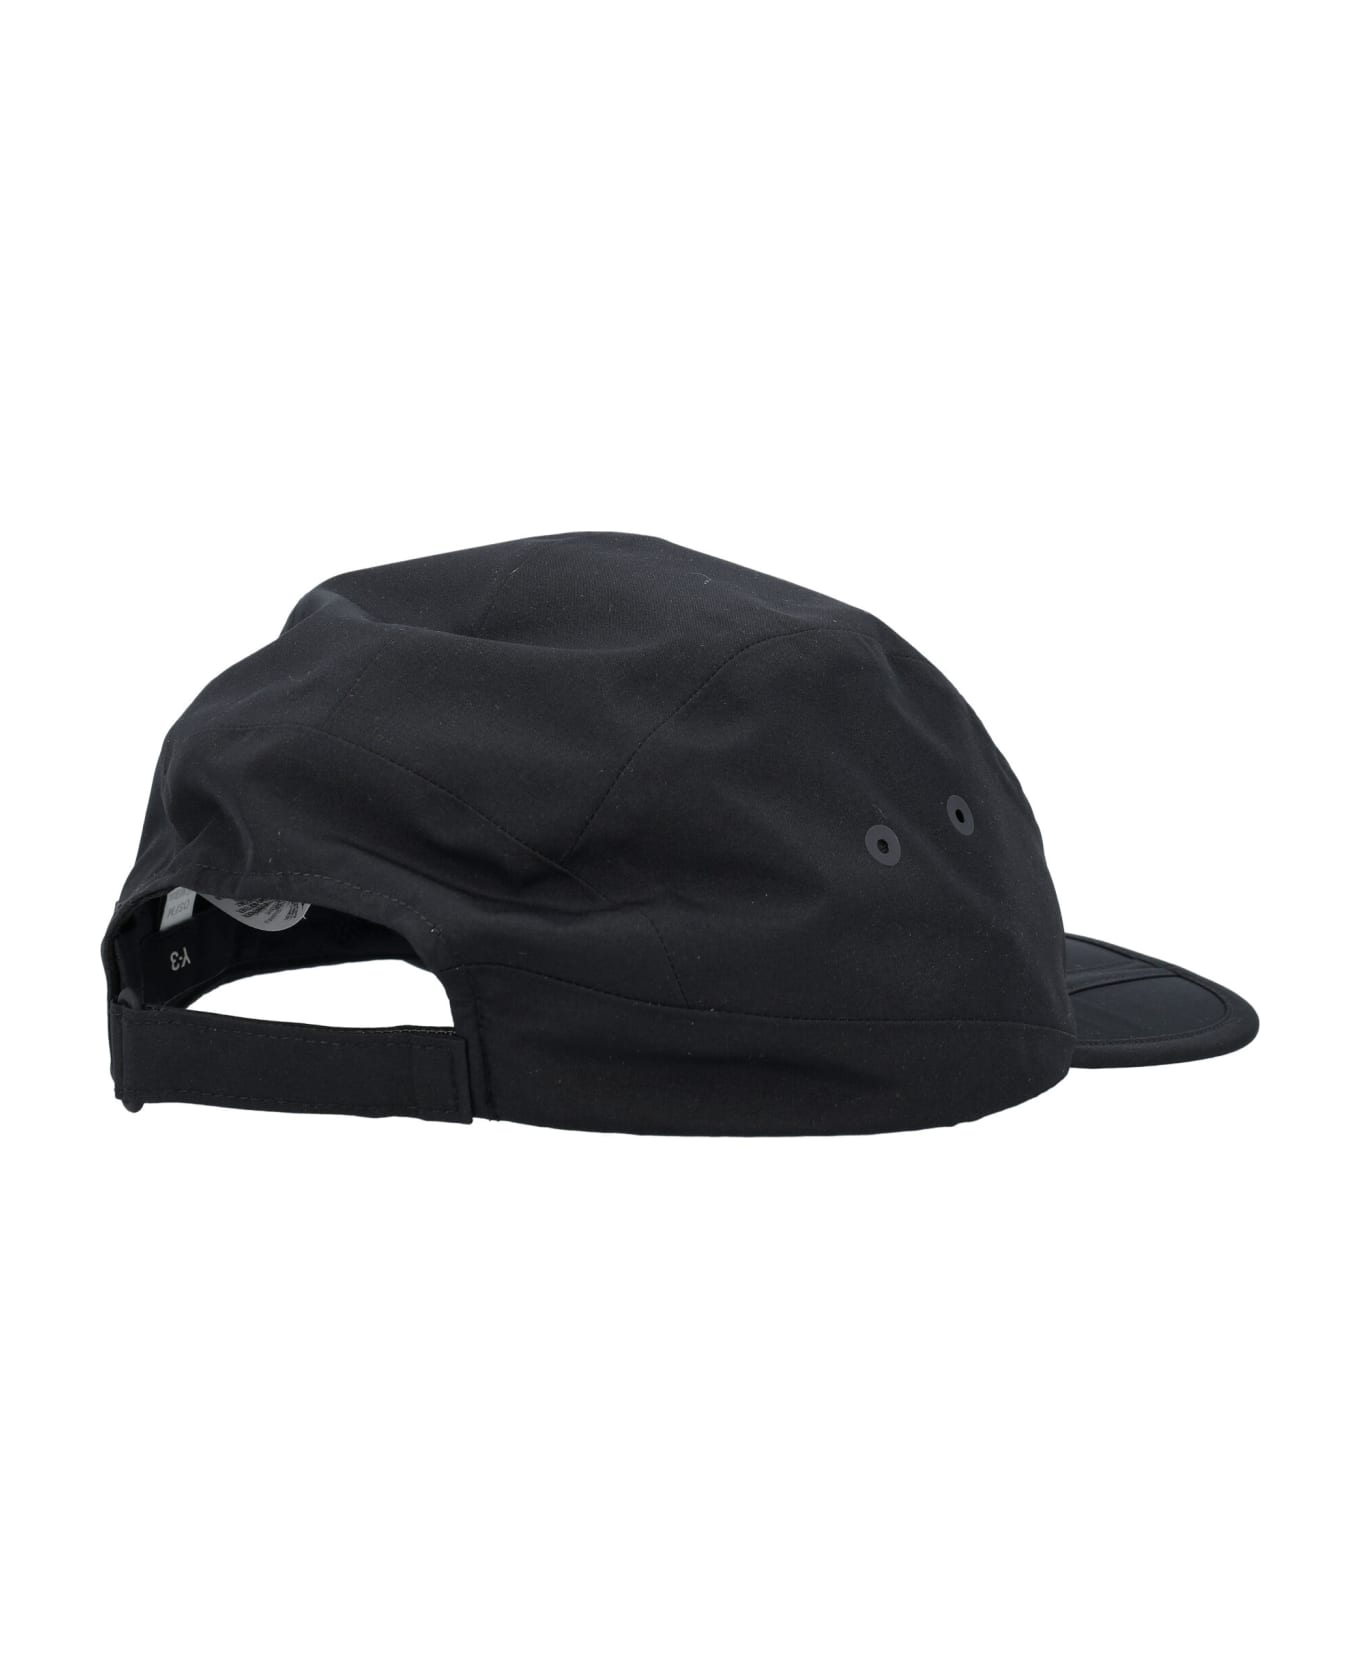 Y-3 Running Cap - BLACK 帽子